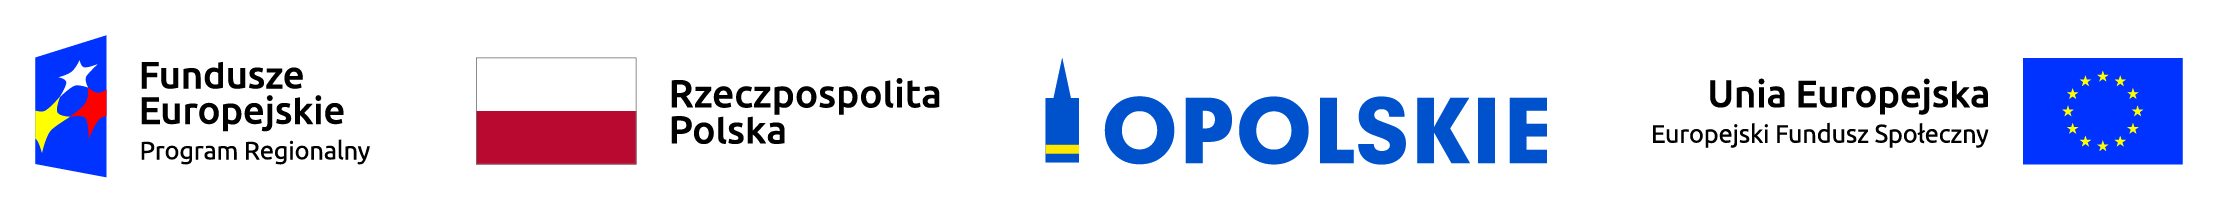 Logotypy RPO